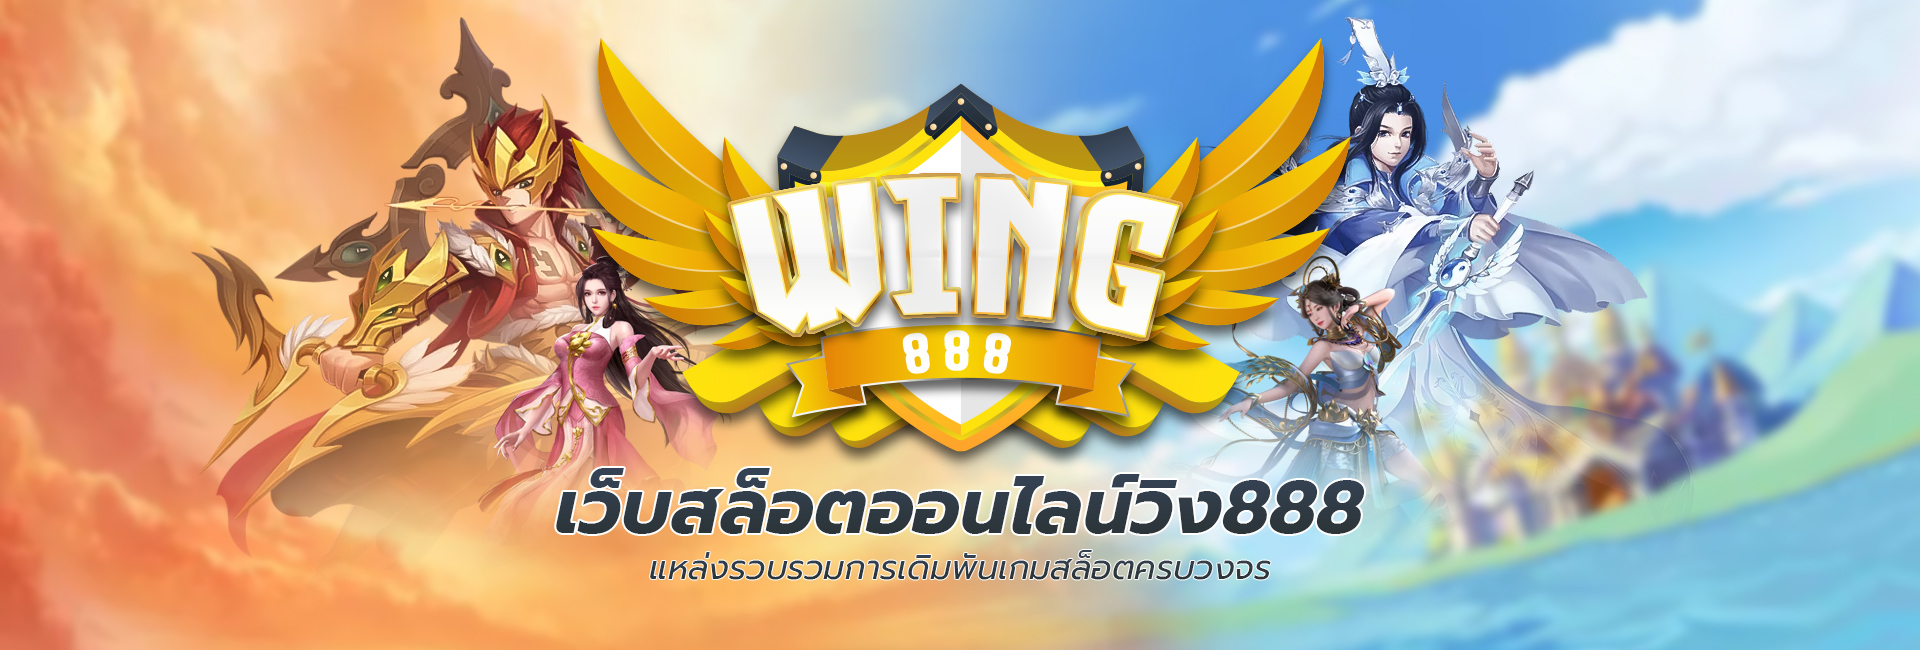 wing888 10